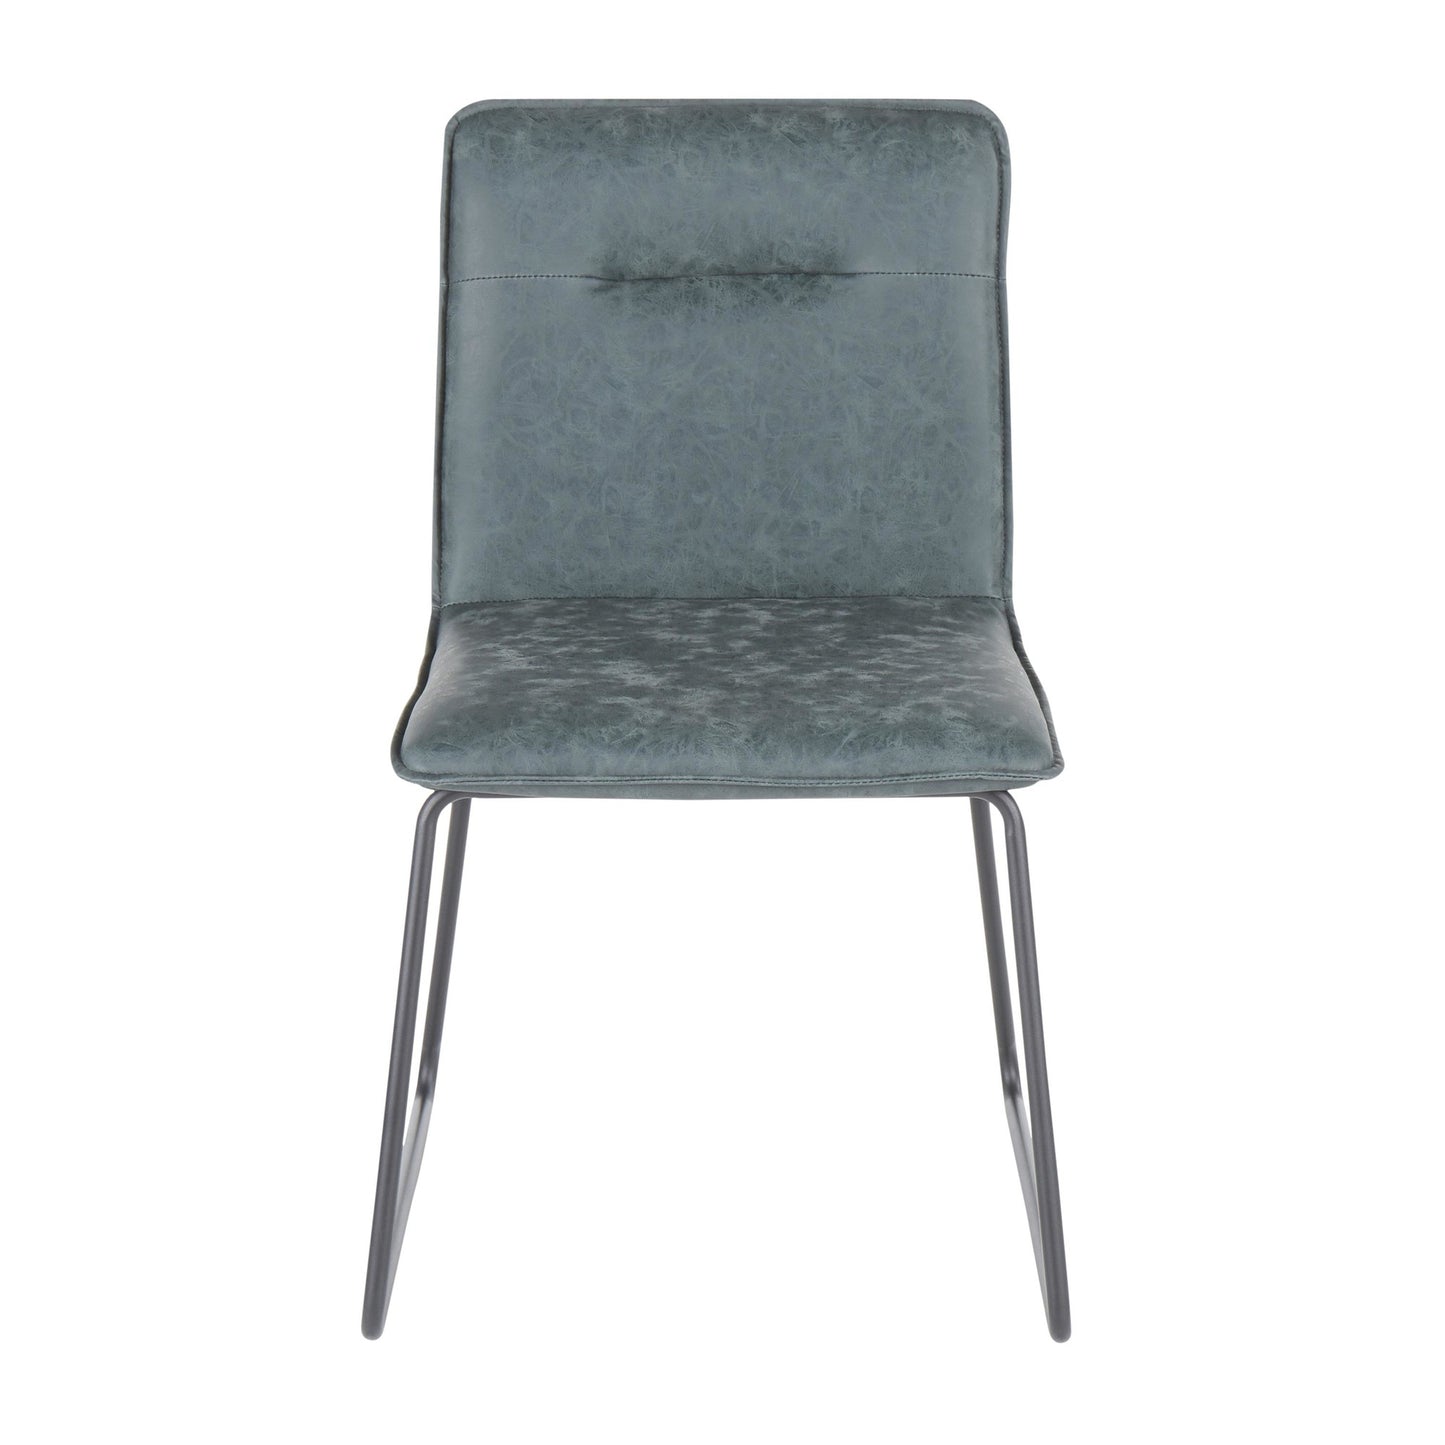 LumiSource Casper Chair - Set of 2-12